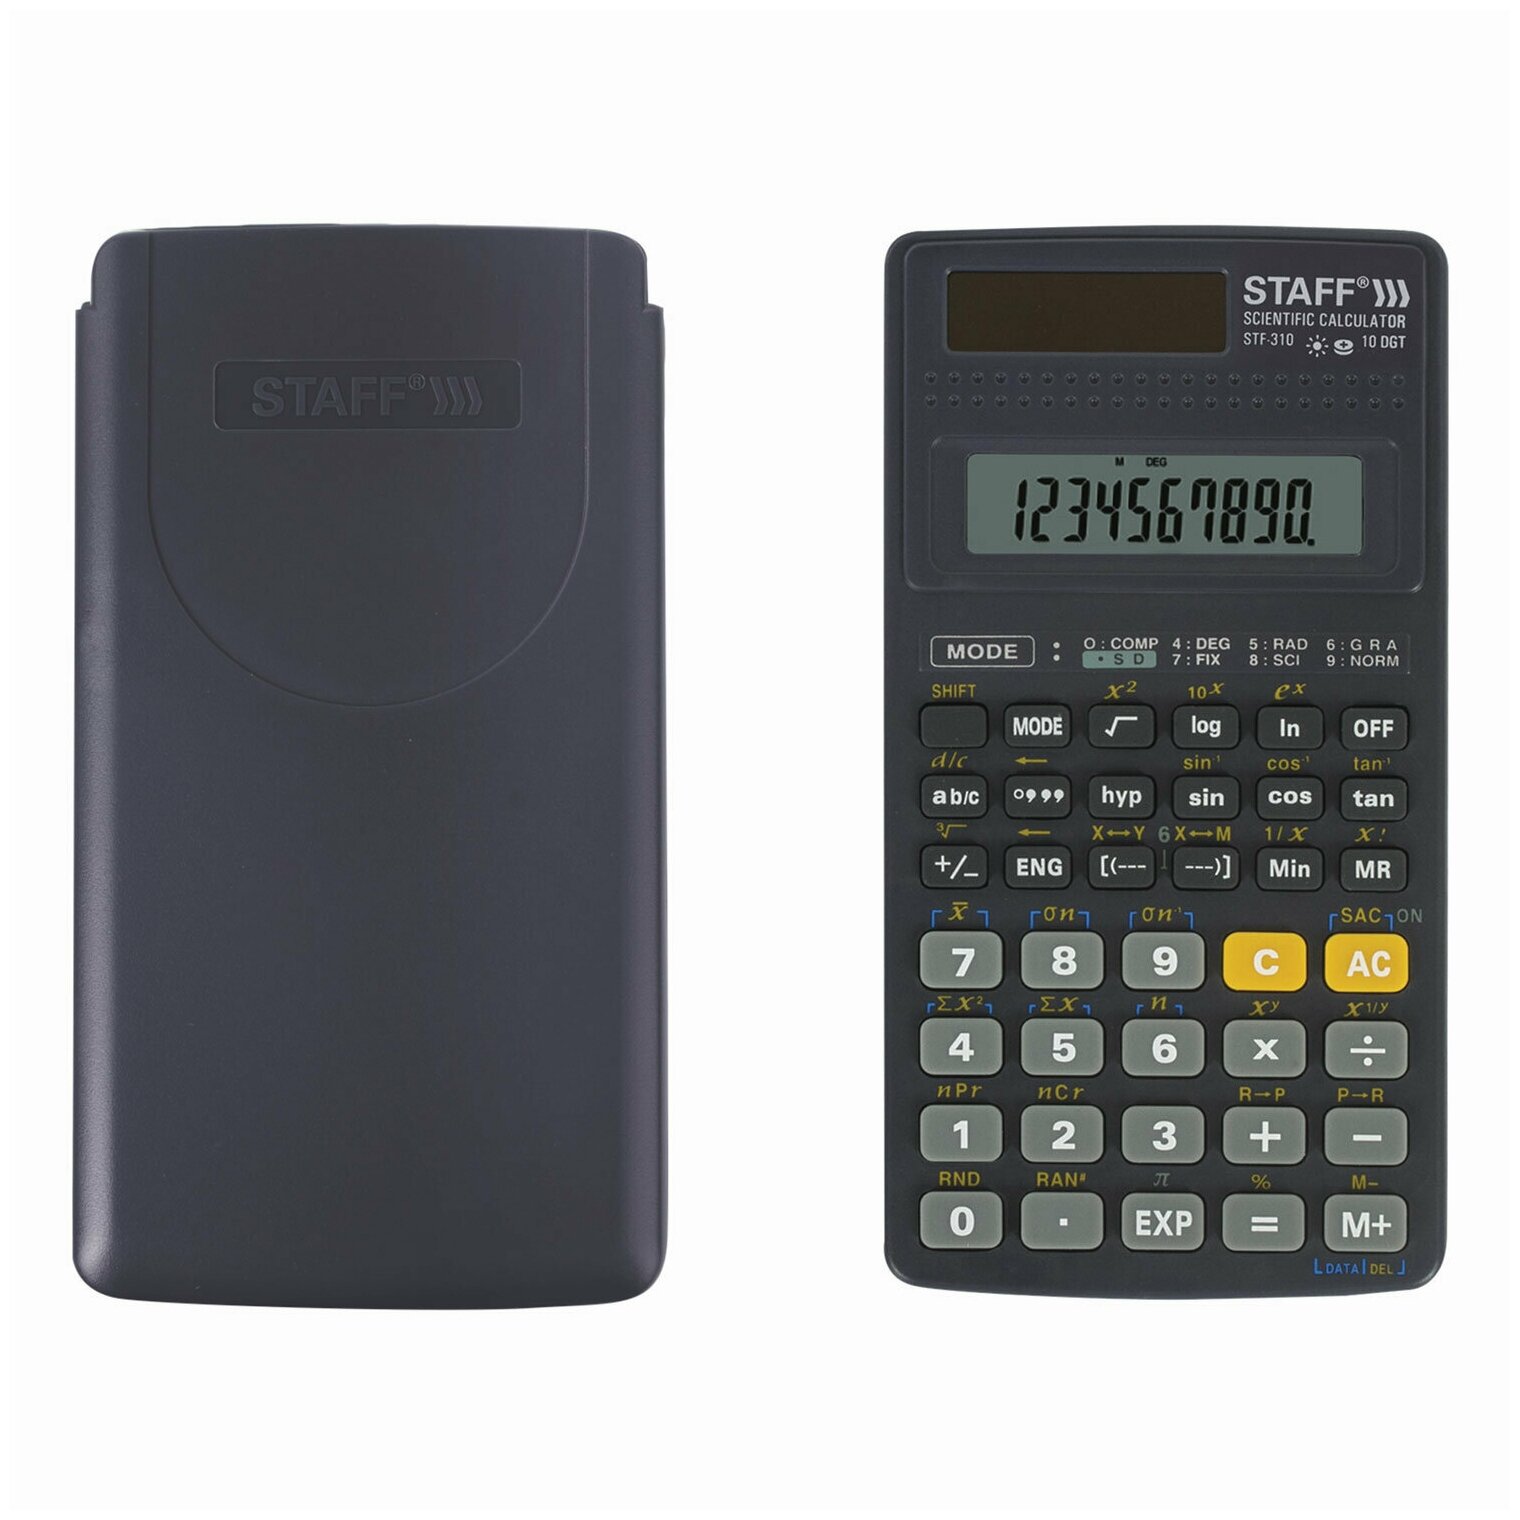 Калькулятор научный STAFF STF-310